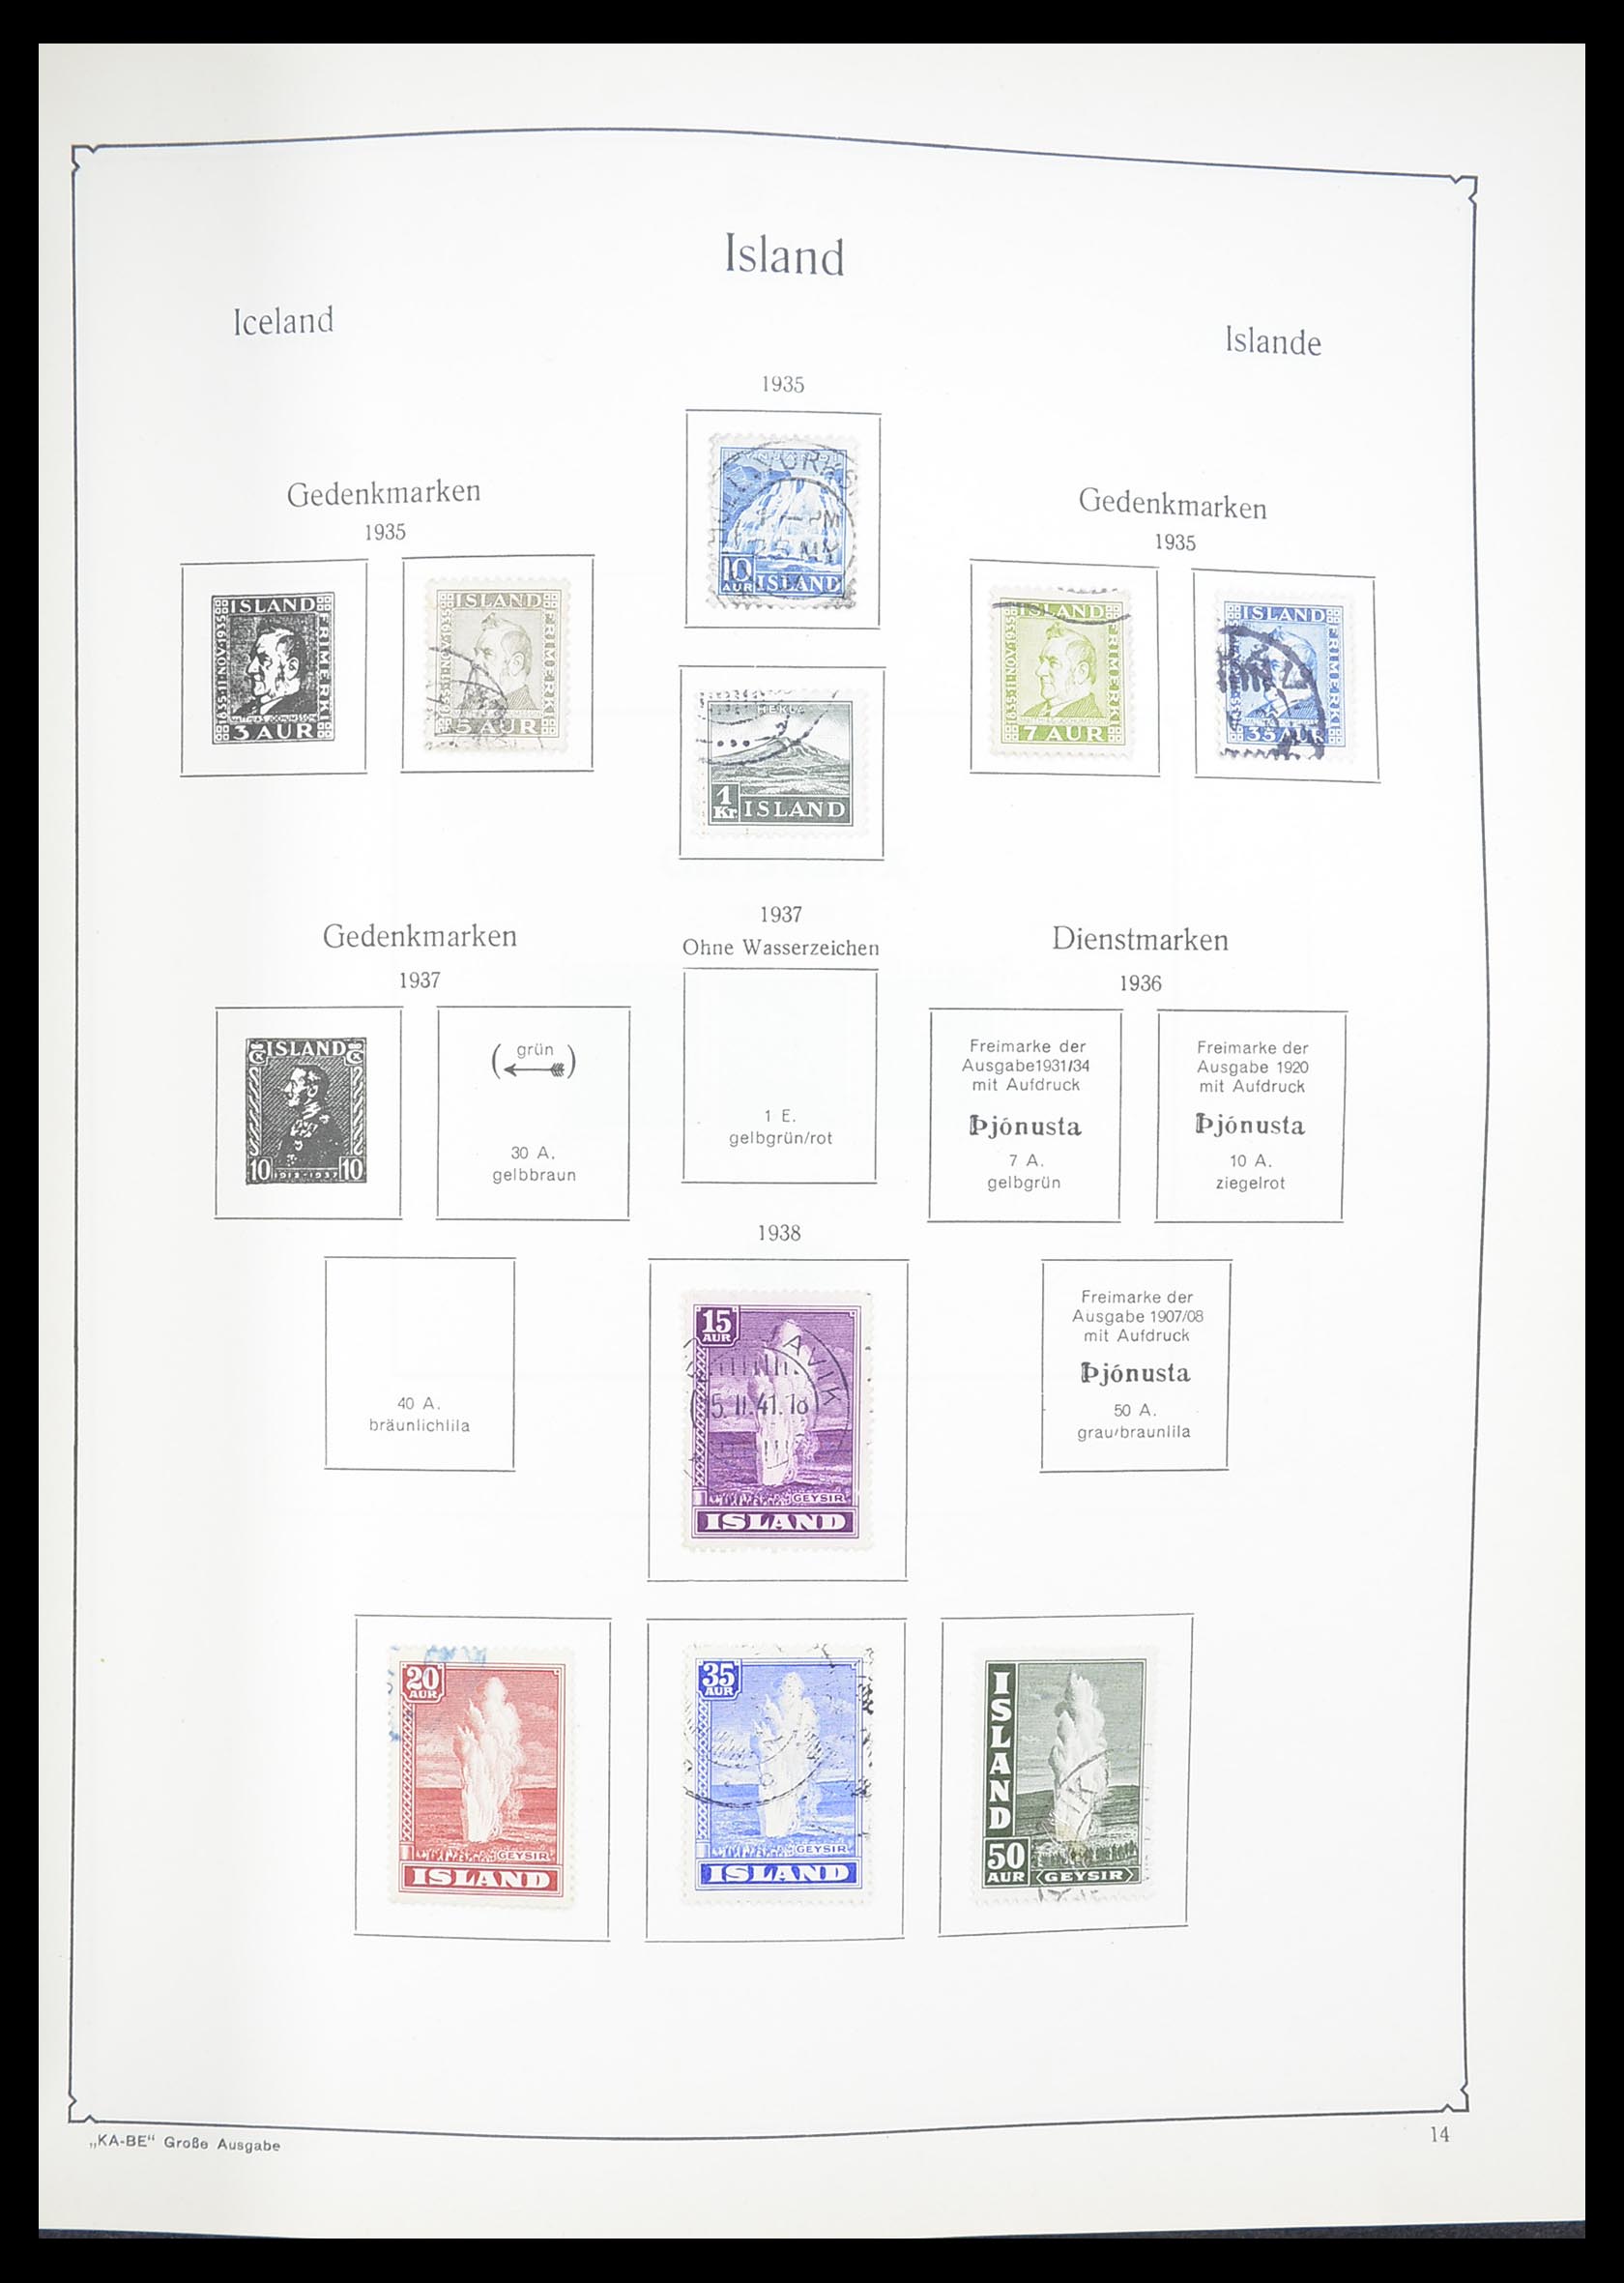 33379 072 - Stamp collection 33379 Scandinavia 1856-1972.